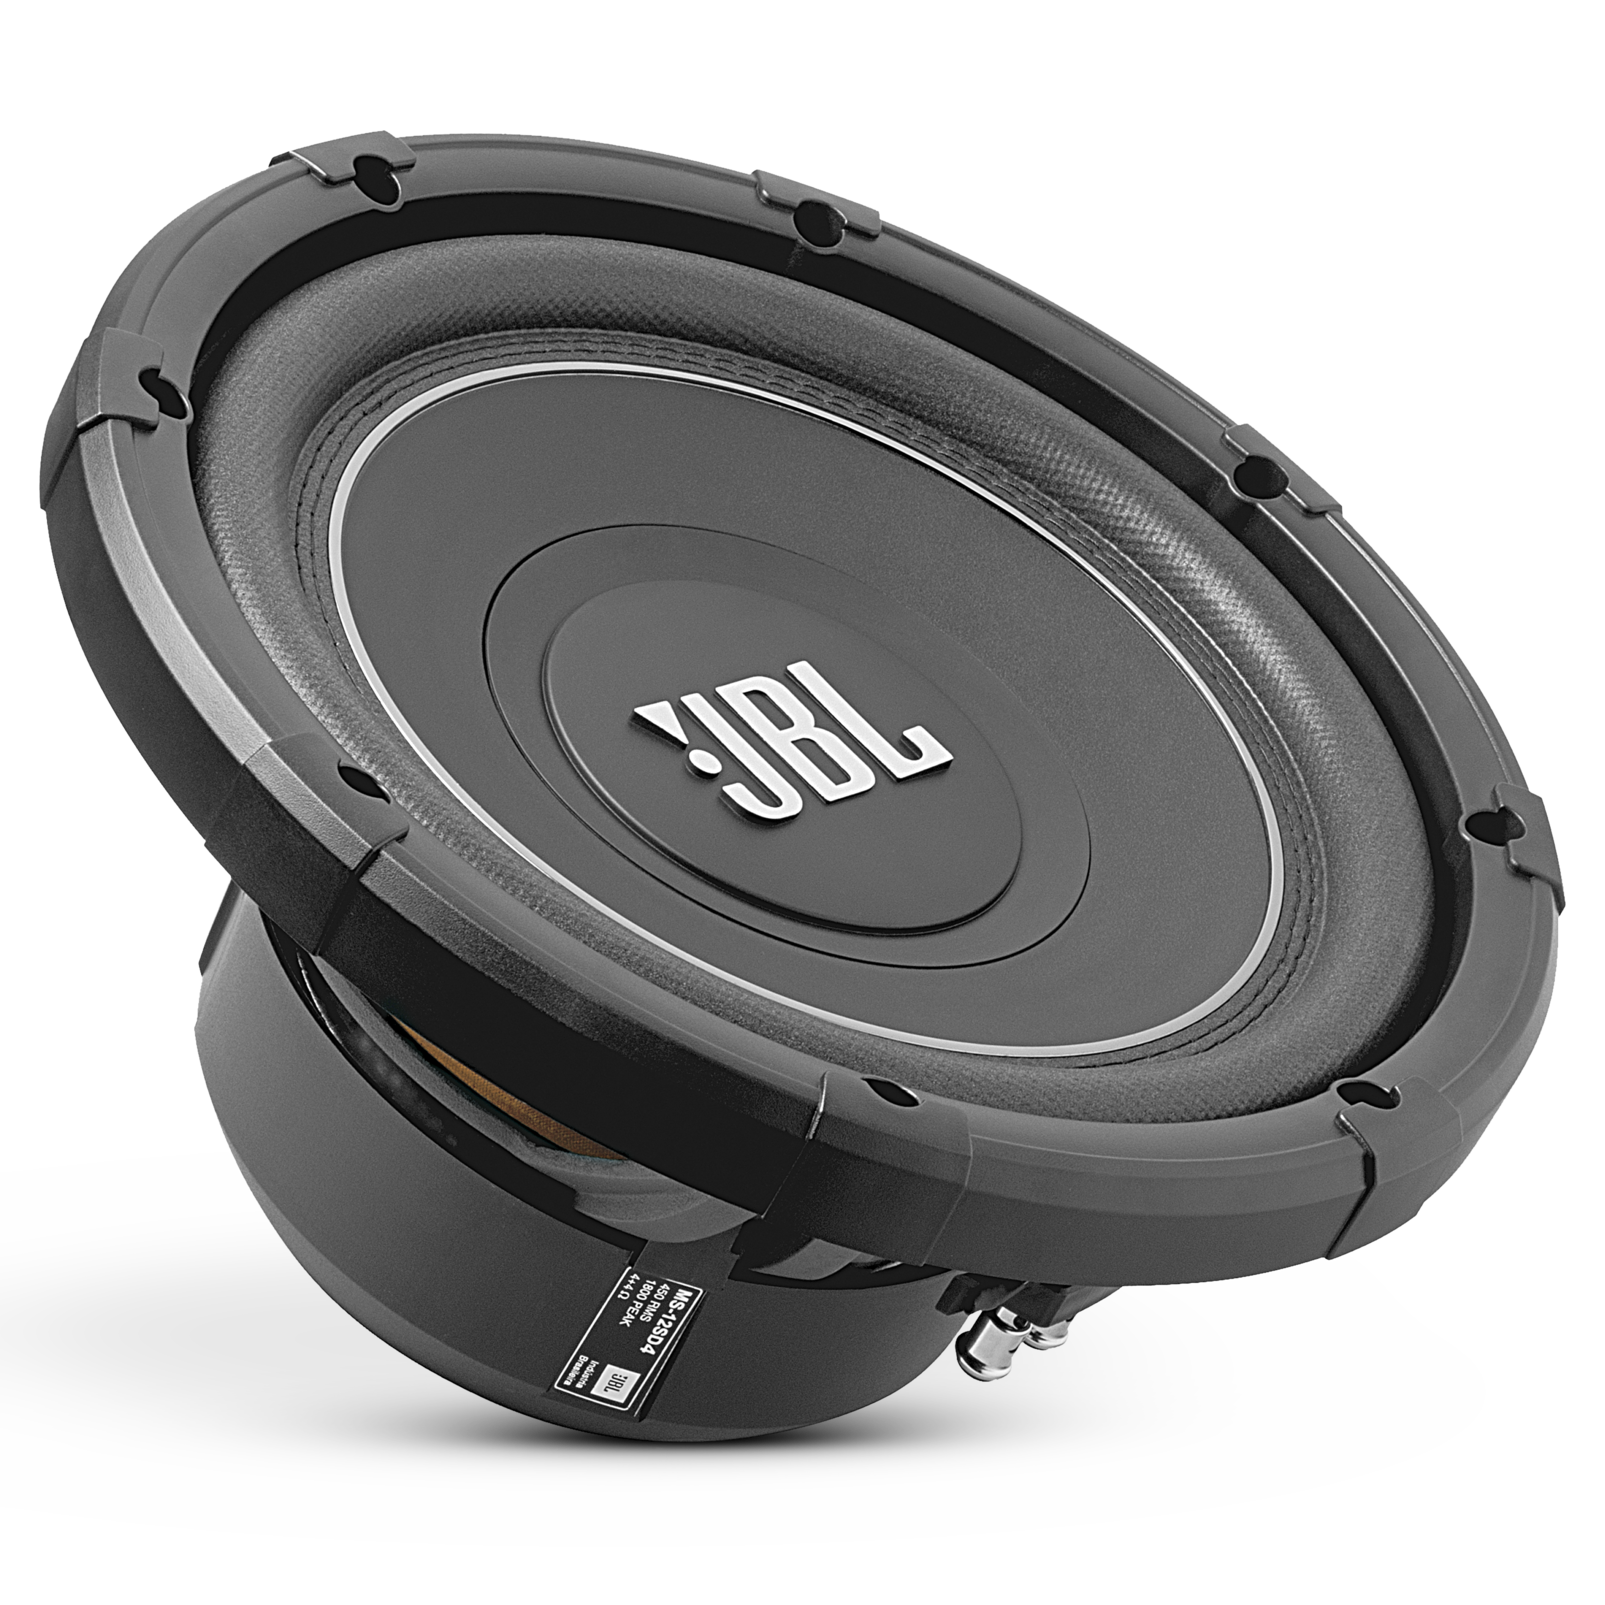 12 inch jbl bass speakers price